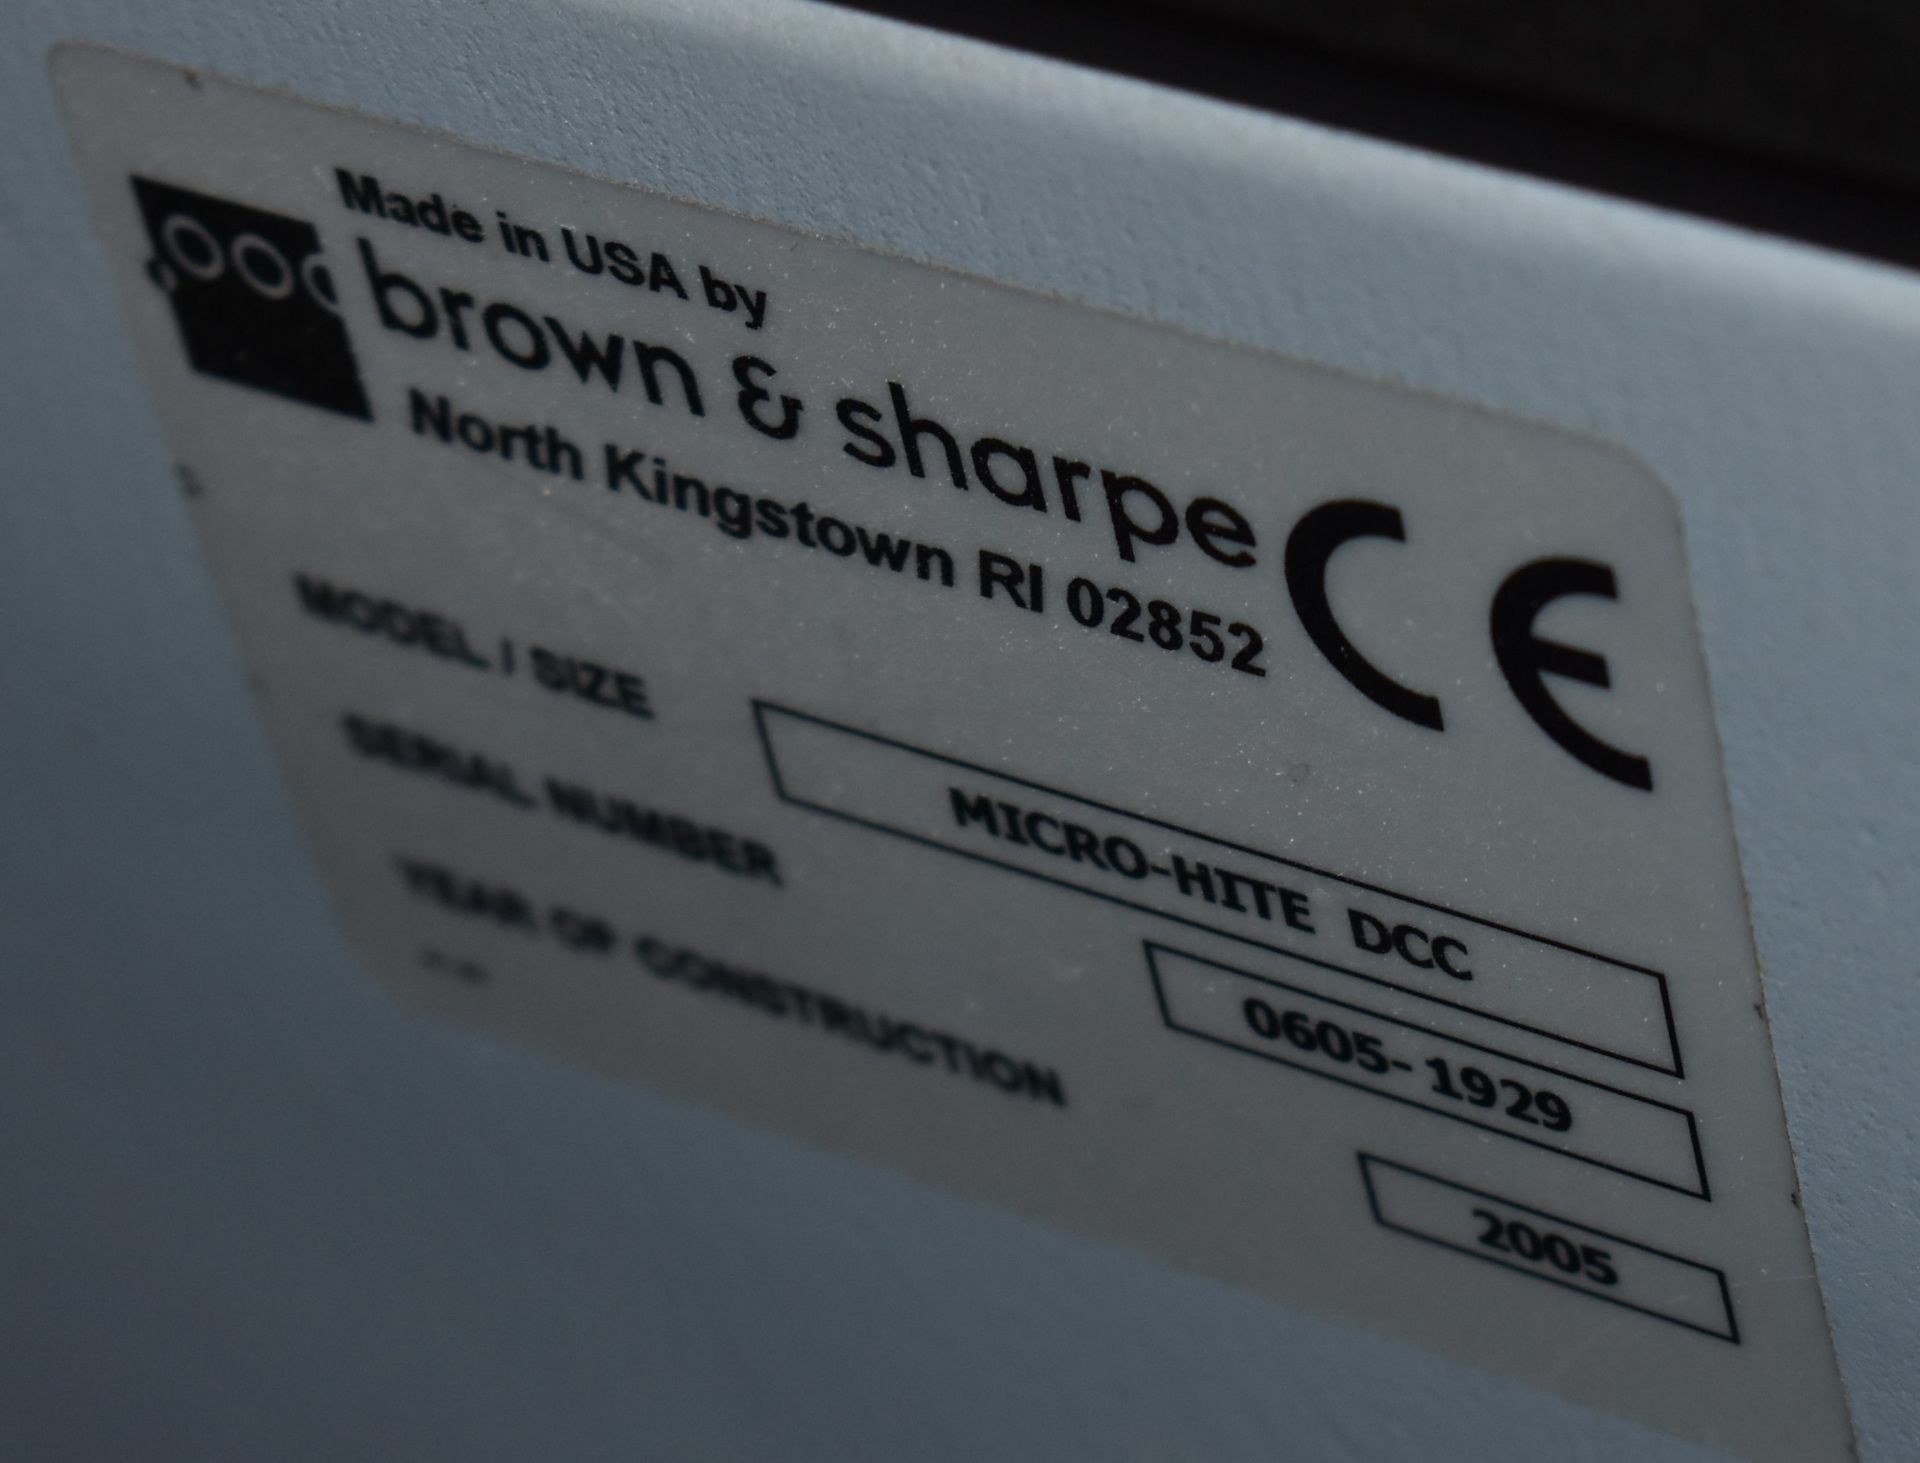 BROWN & SHARPE MICRO-HITE DCC COORDINATE MEASURING MACHINE WITH PC-DMIS PRO 3.7 WINDOWS PC BASED - Image 10 of 12